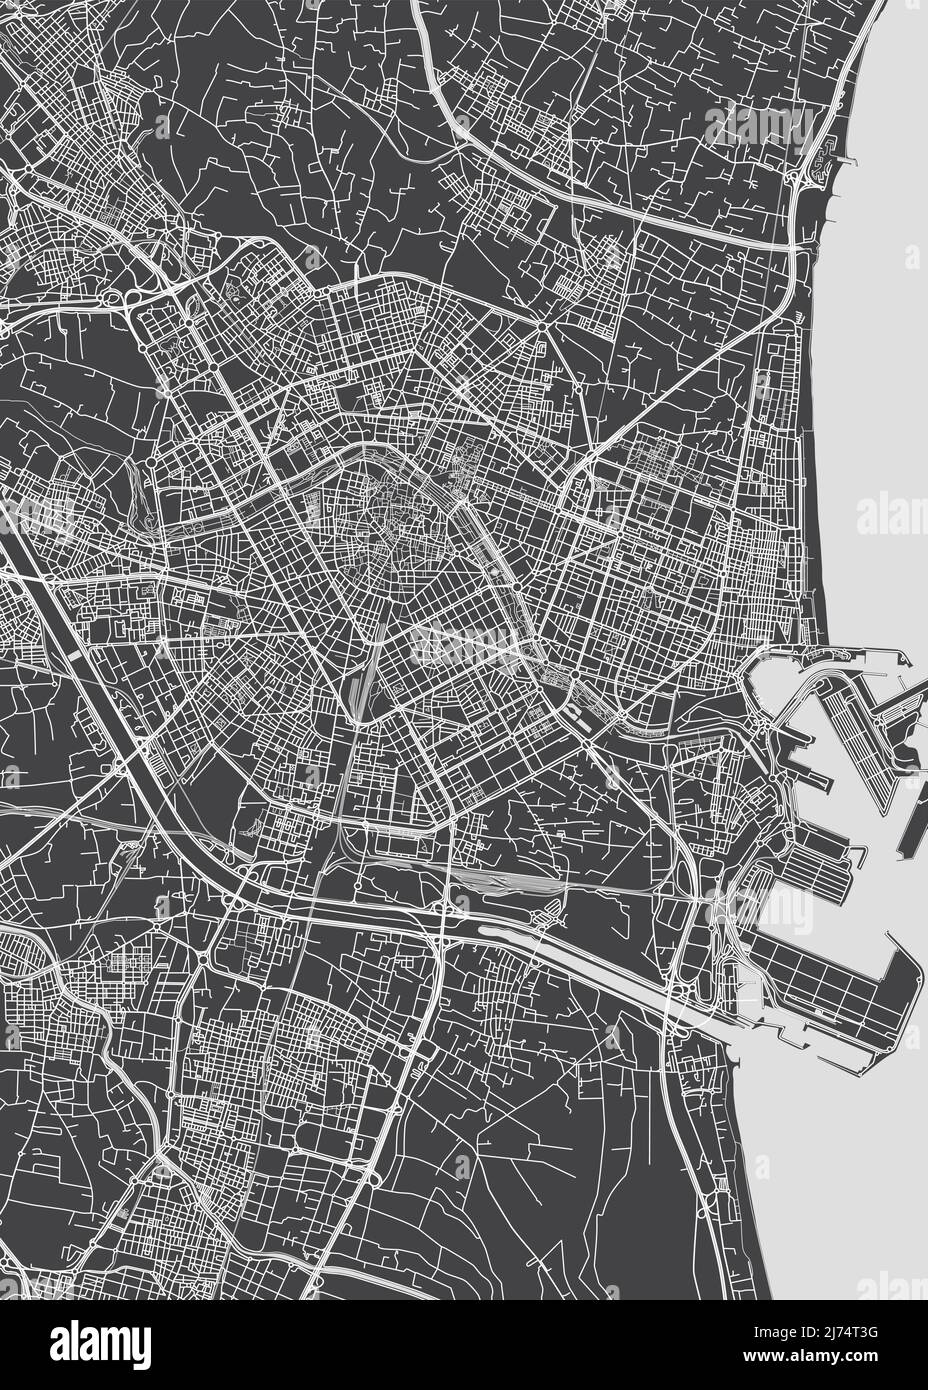 Stadtplan Valencia, monochromer Detailplan, Vektorgrafik Stock Vektor